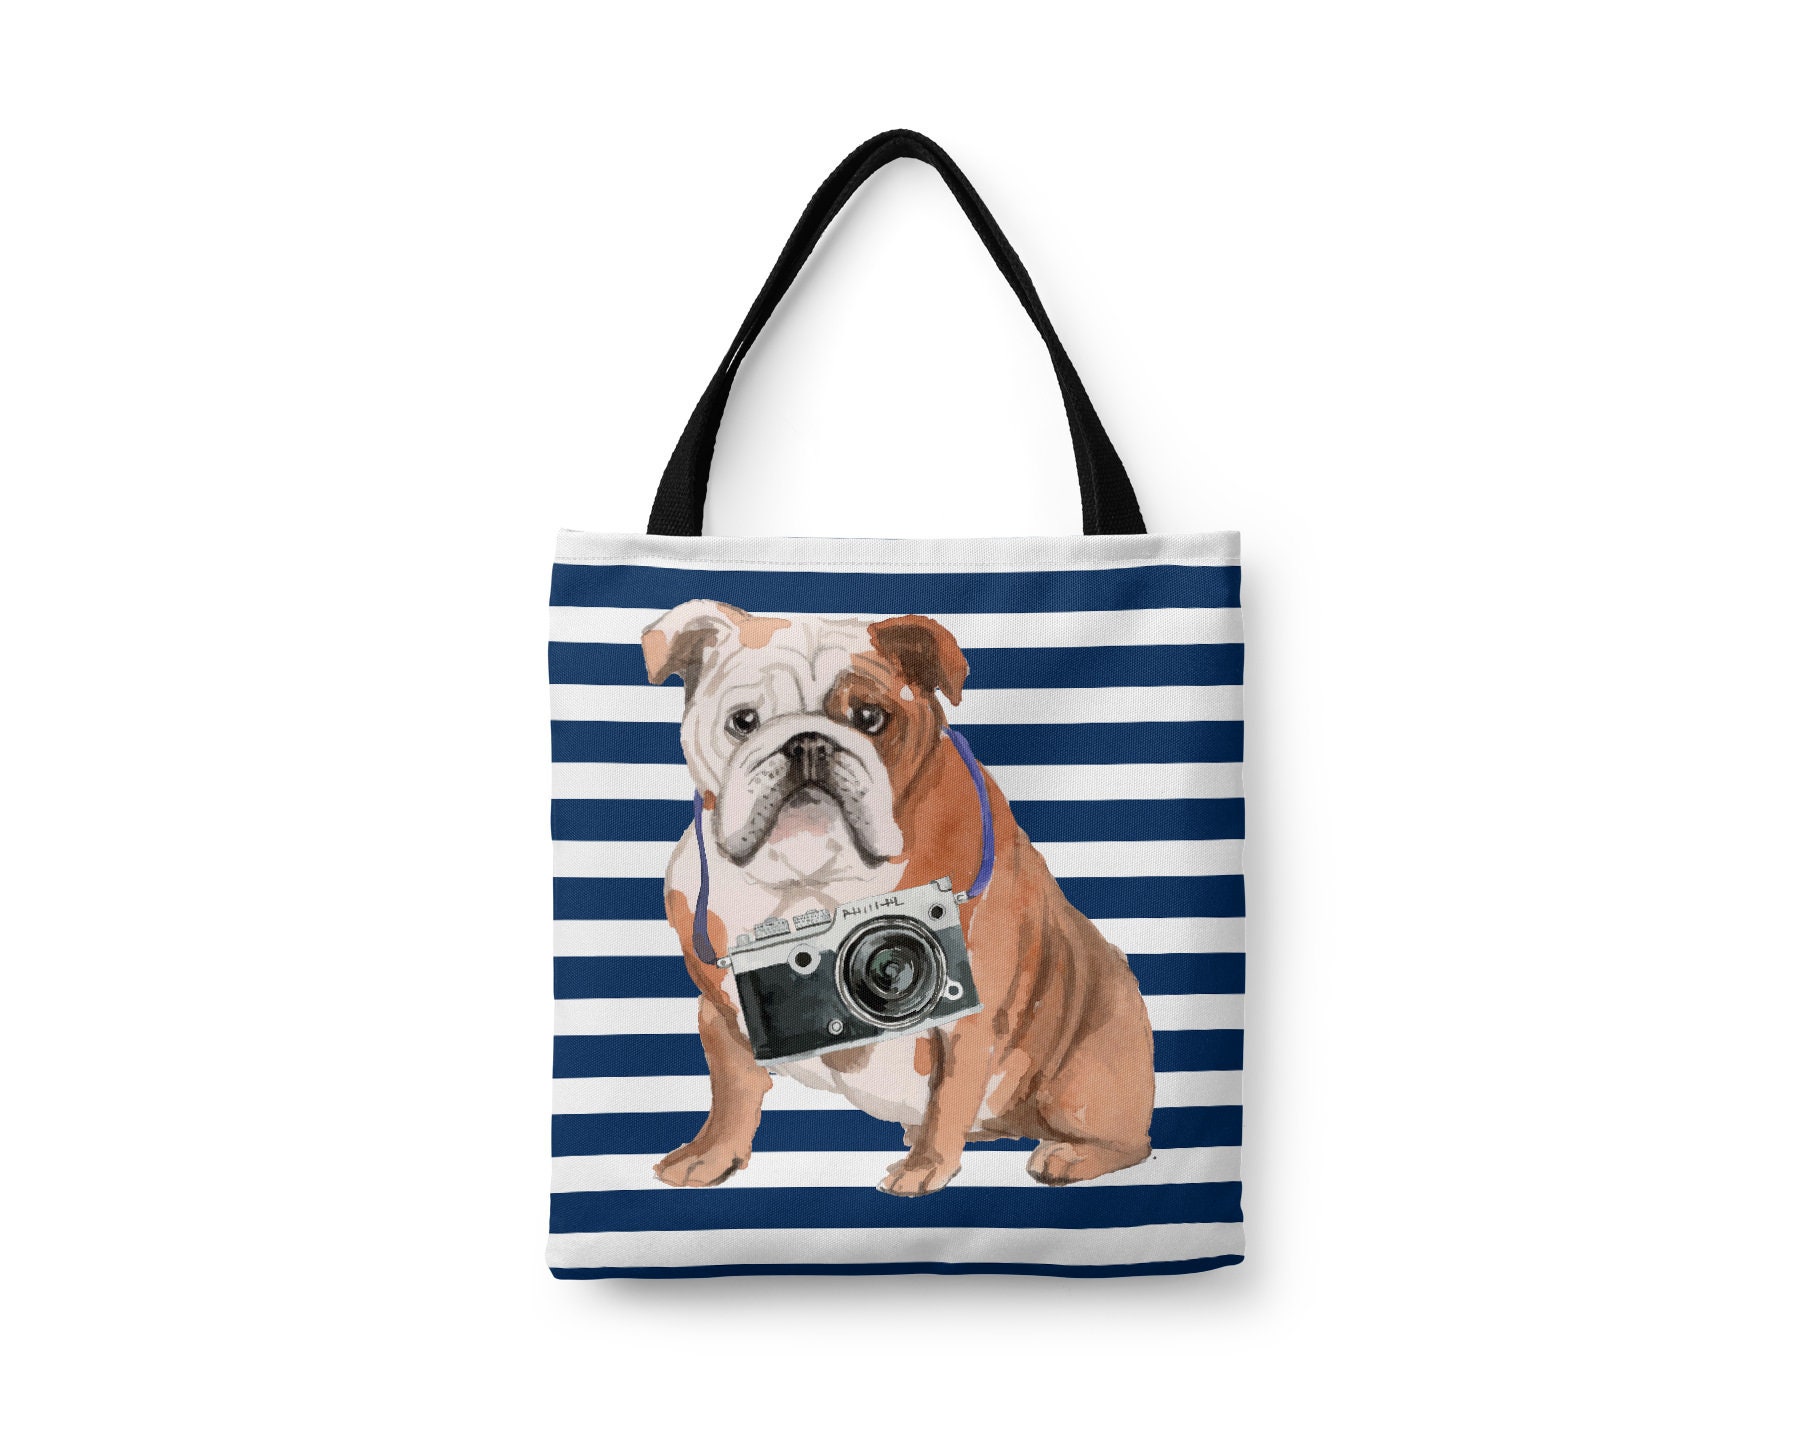 English Bulldog Tote Bag - Illustrated Dogs & 6 Travel Inspired Styles. All Purpose For Work, Shopping, Life. British Bulldog, Churchill Dog